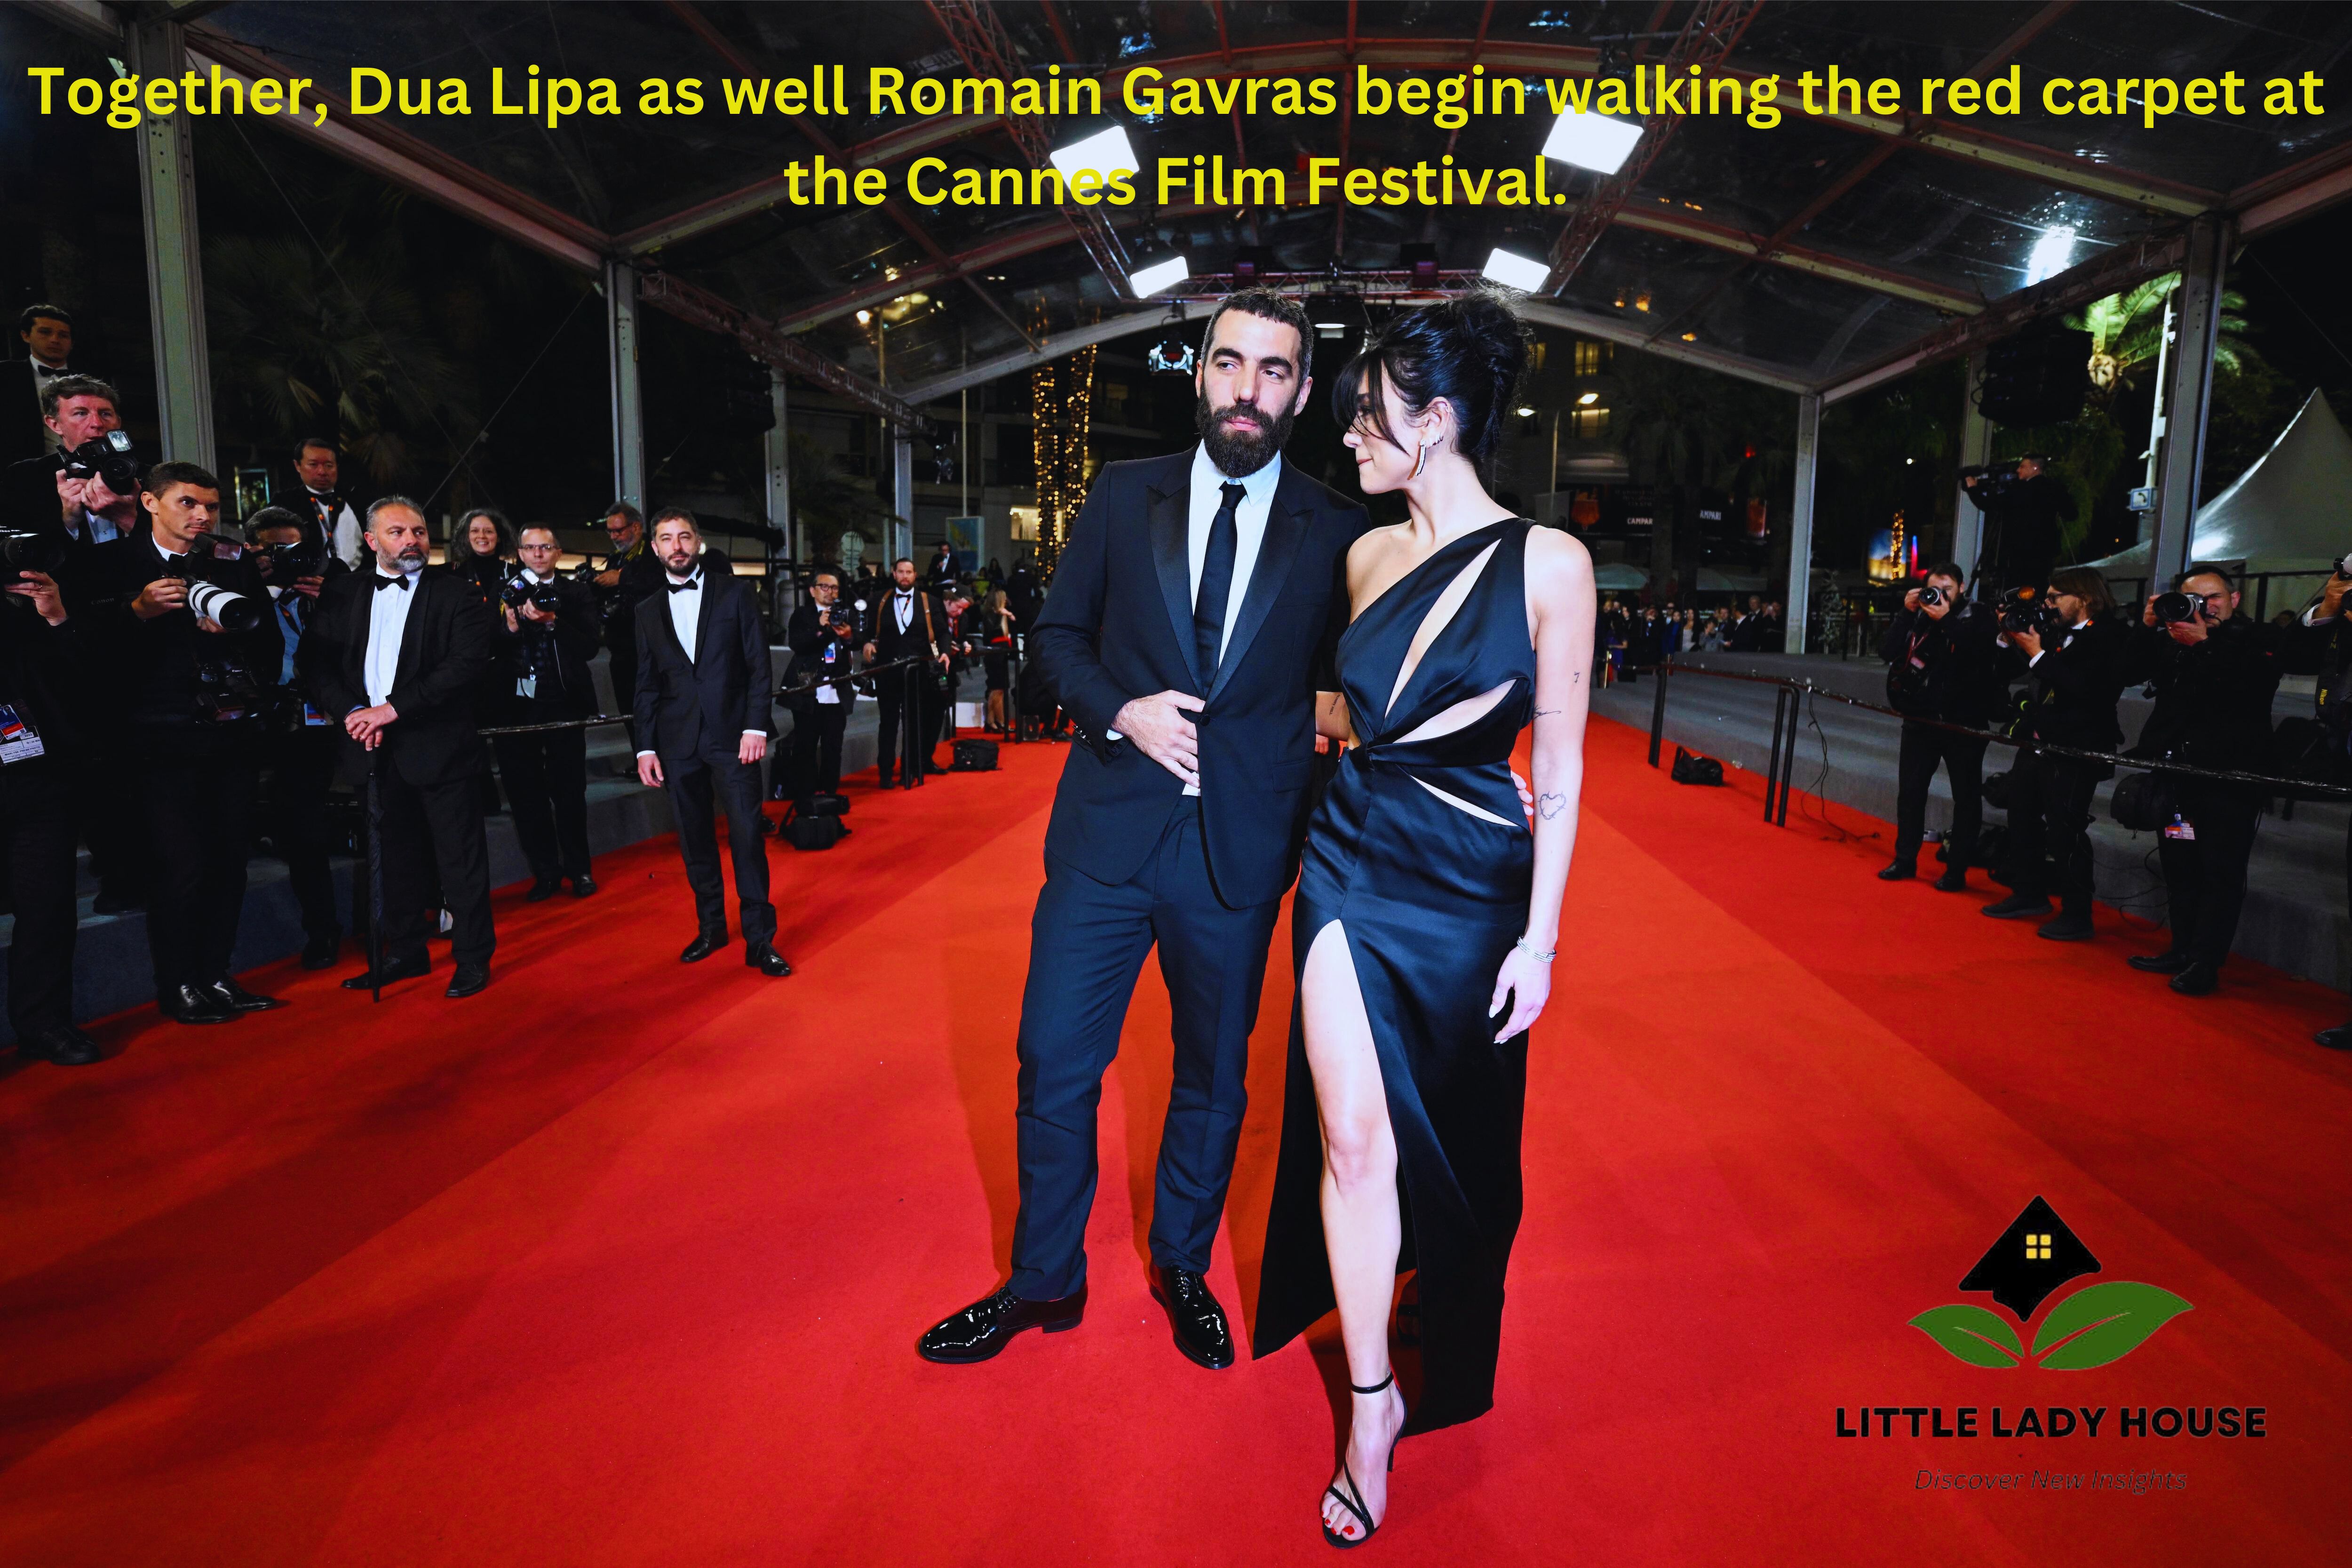 Dua Lipa and Romain Gavras begin walking the red carpet at the Cannes Film Festival.